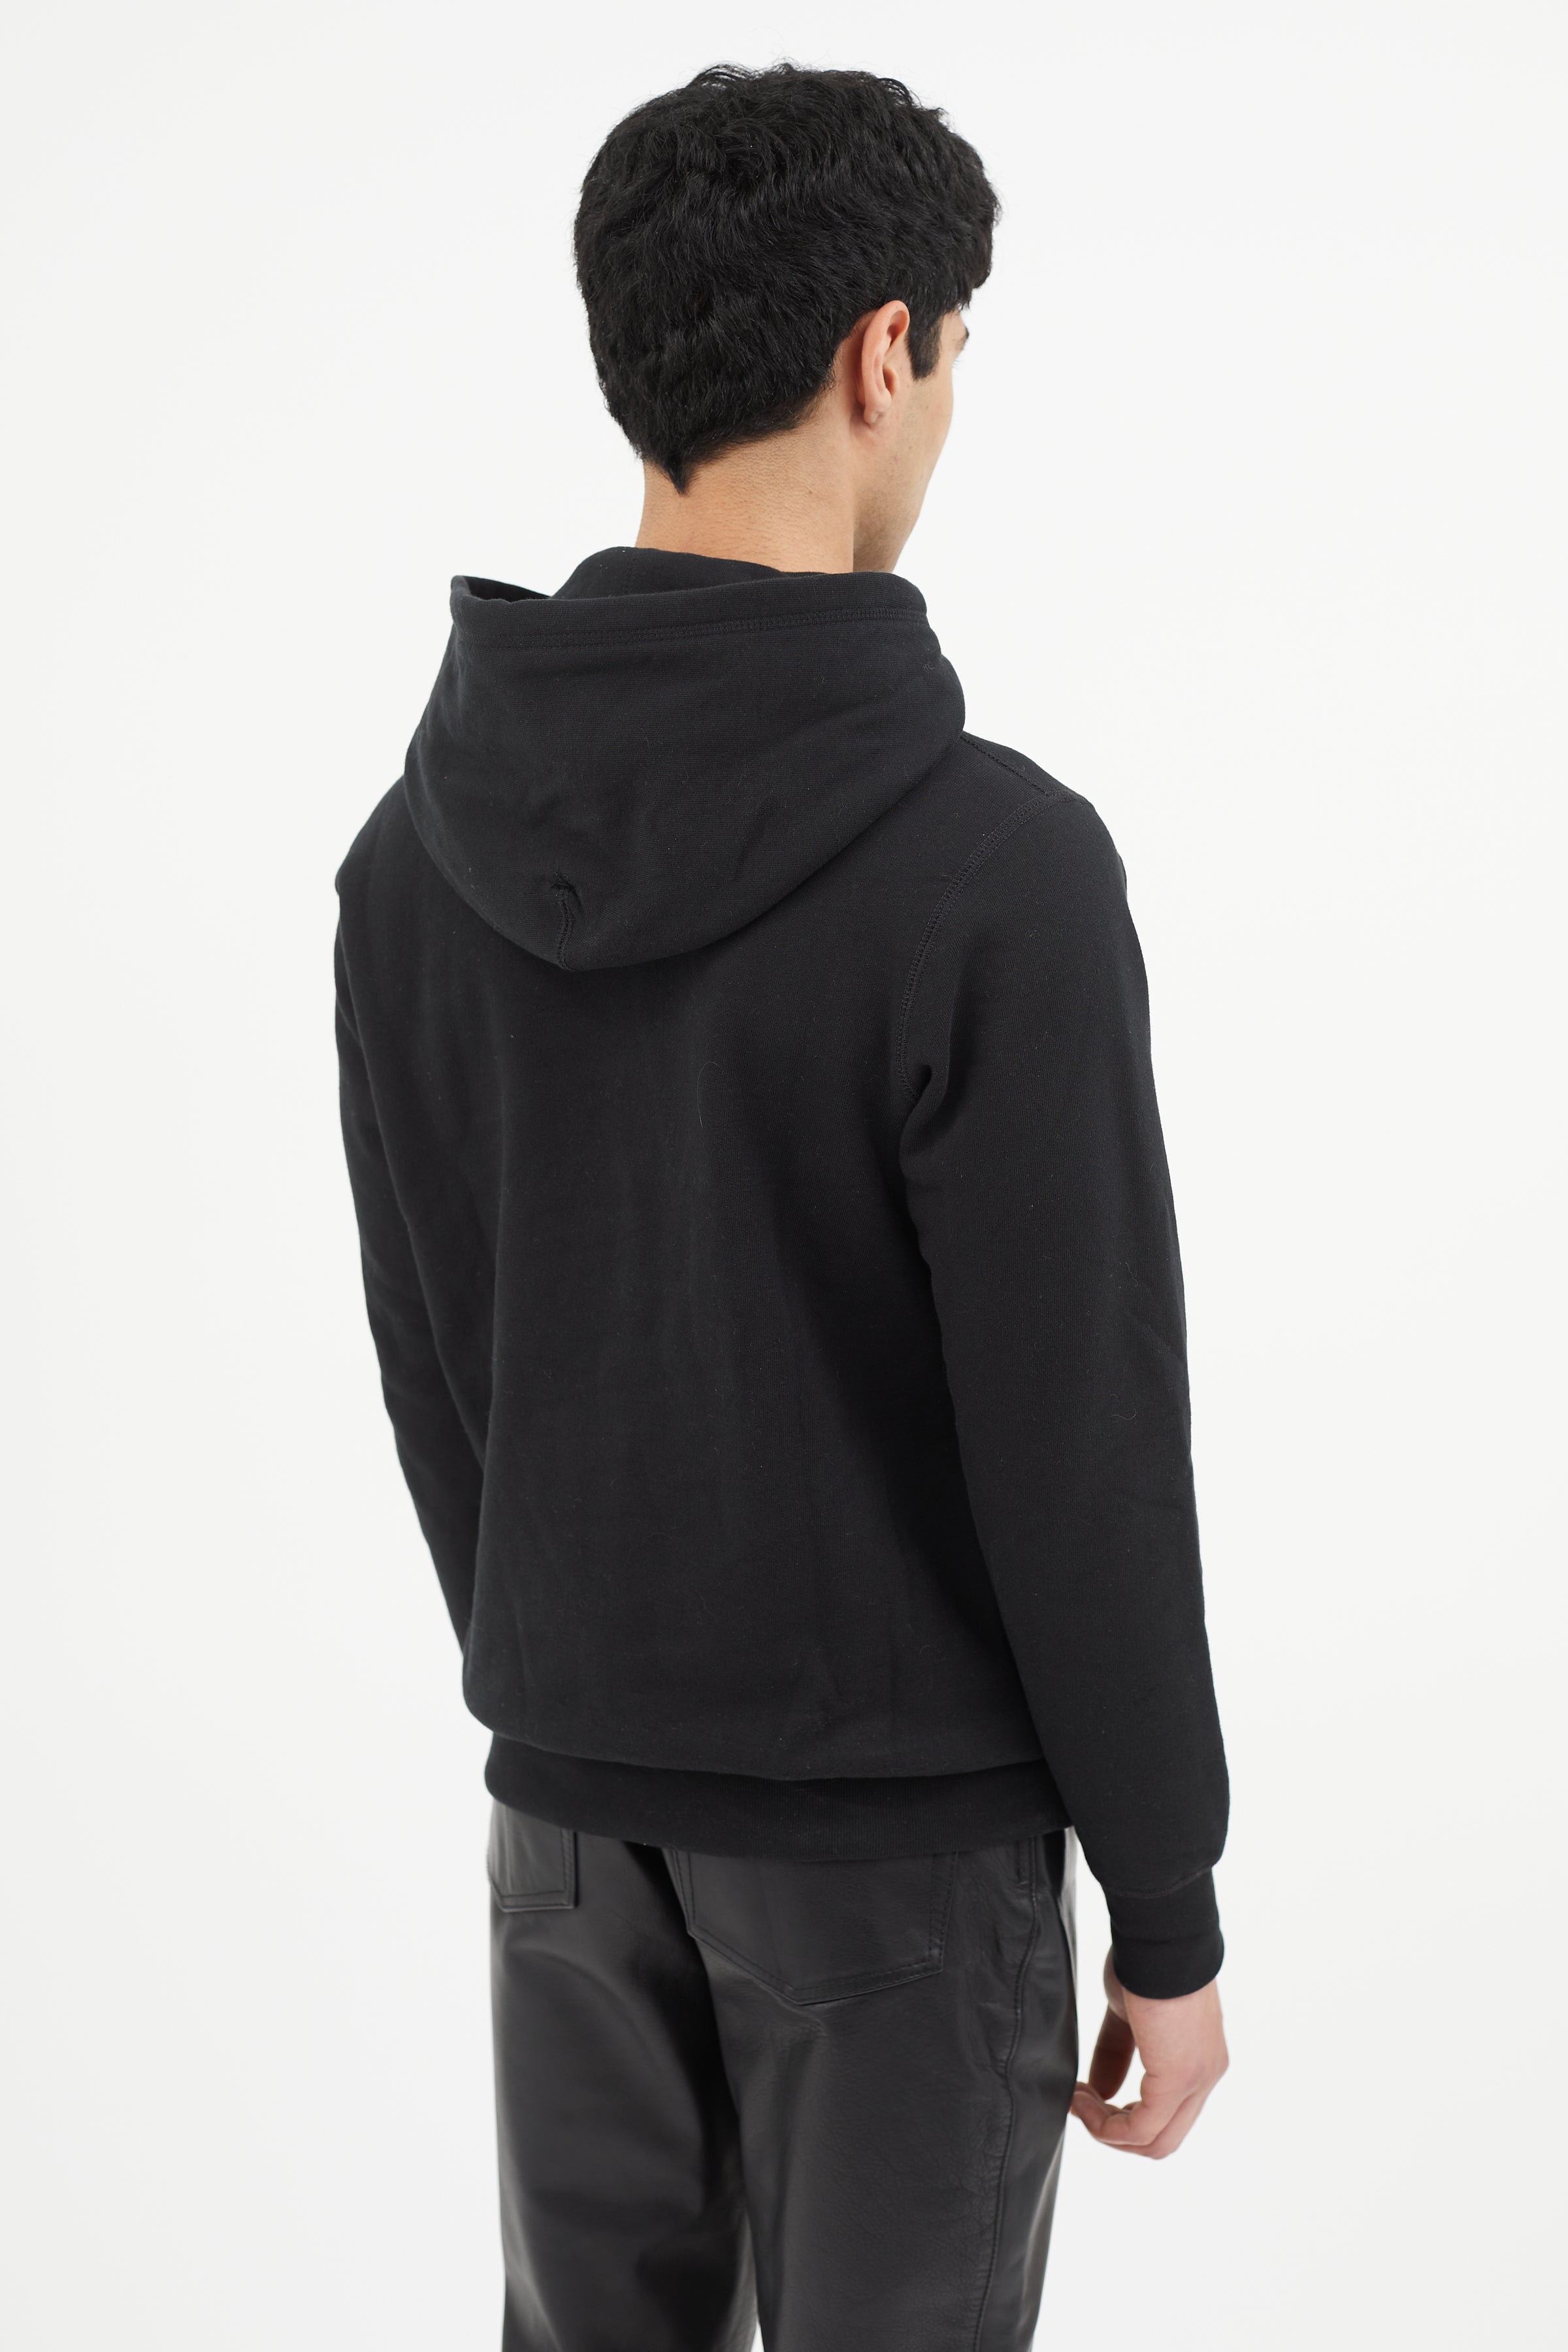 Takashi Murakami - Authenticated Sweatshirt - Cotton Black for Men, Very Good Condition